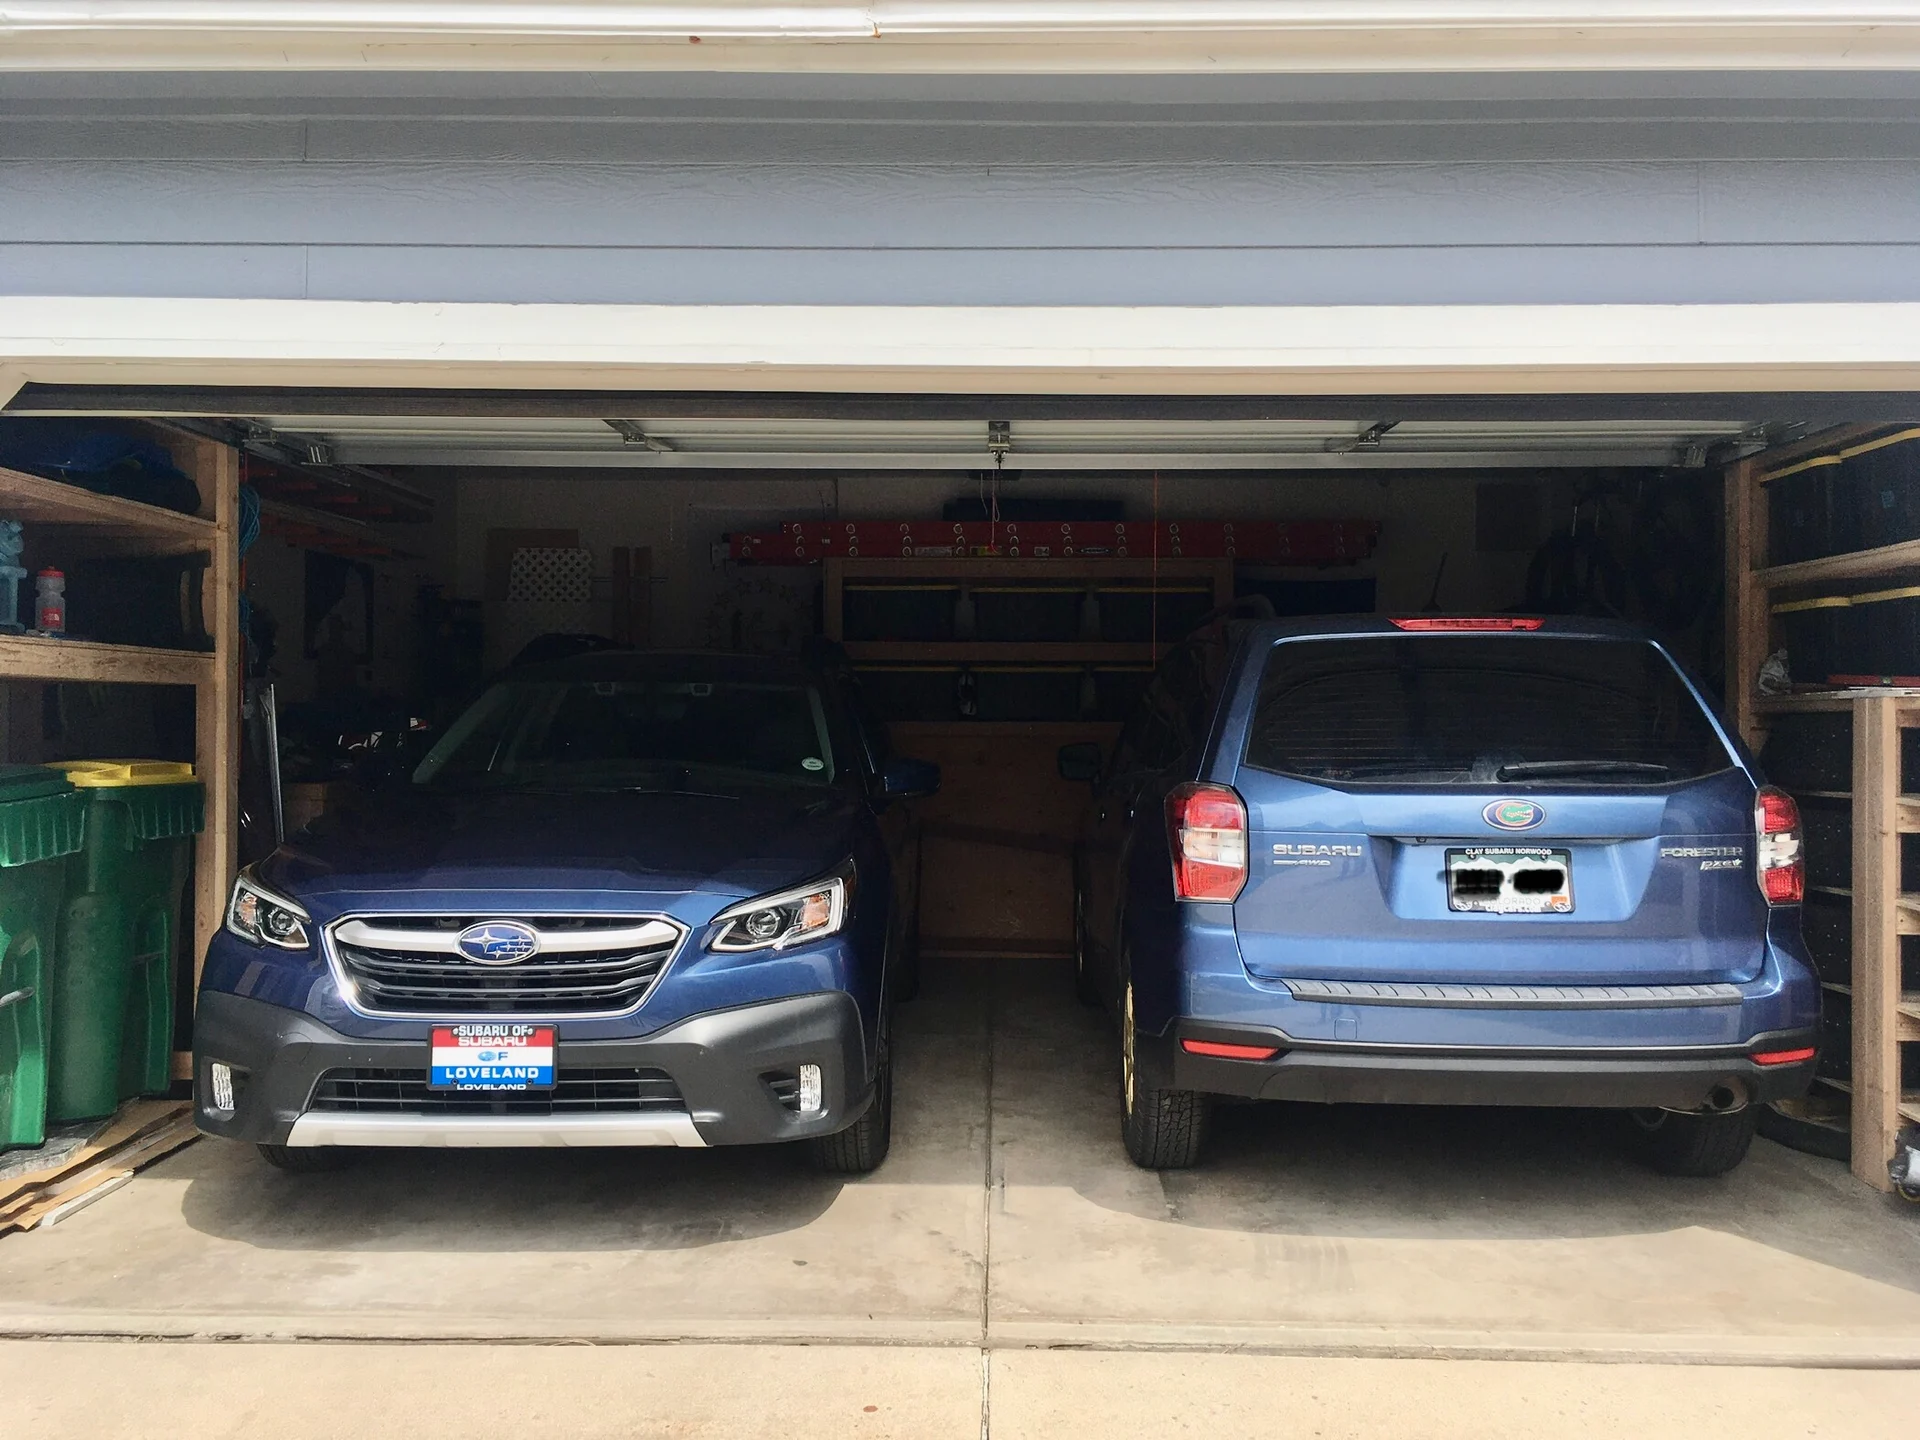 How to Program Your Subaru Garage Door Opener Without a Remote